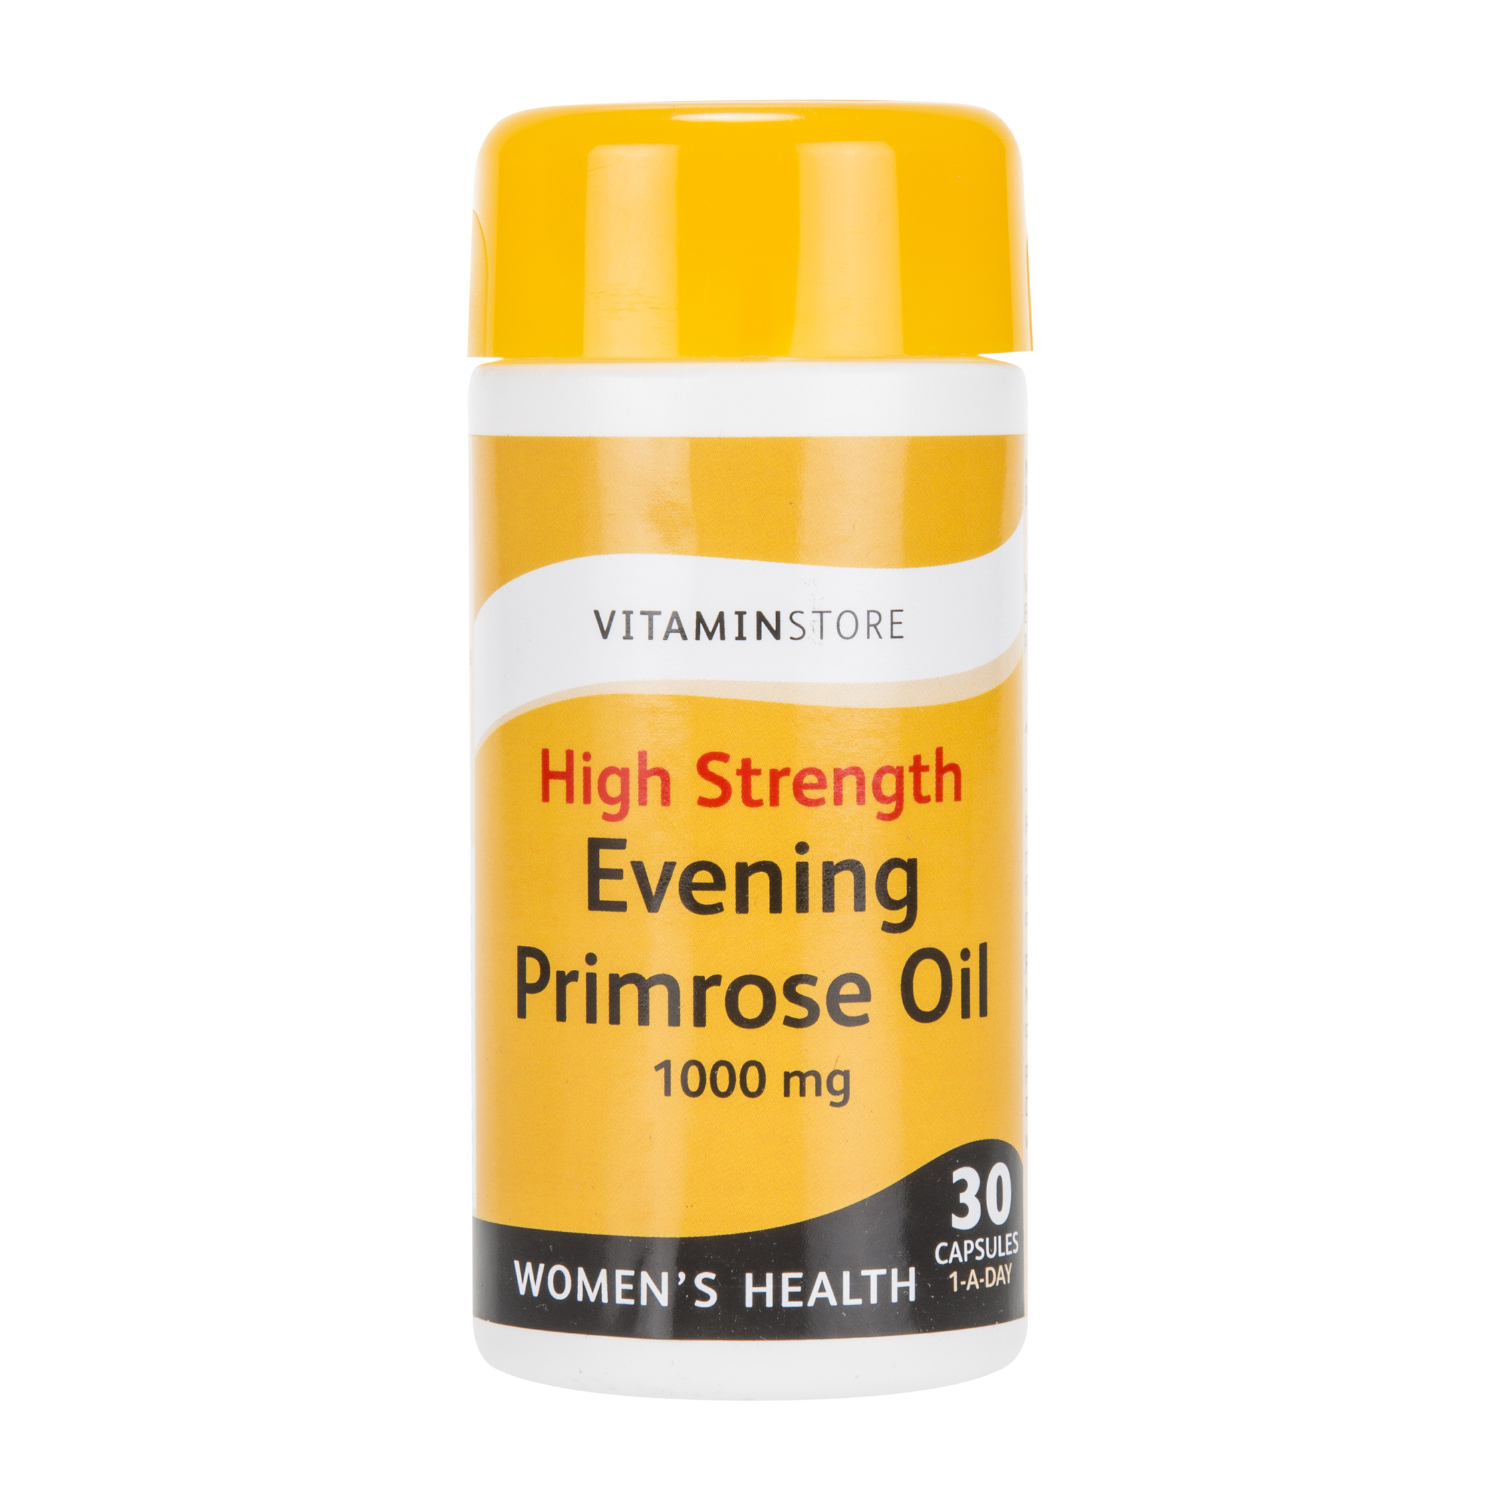 High Strength Evening Primrose Oil Image